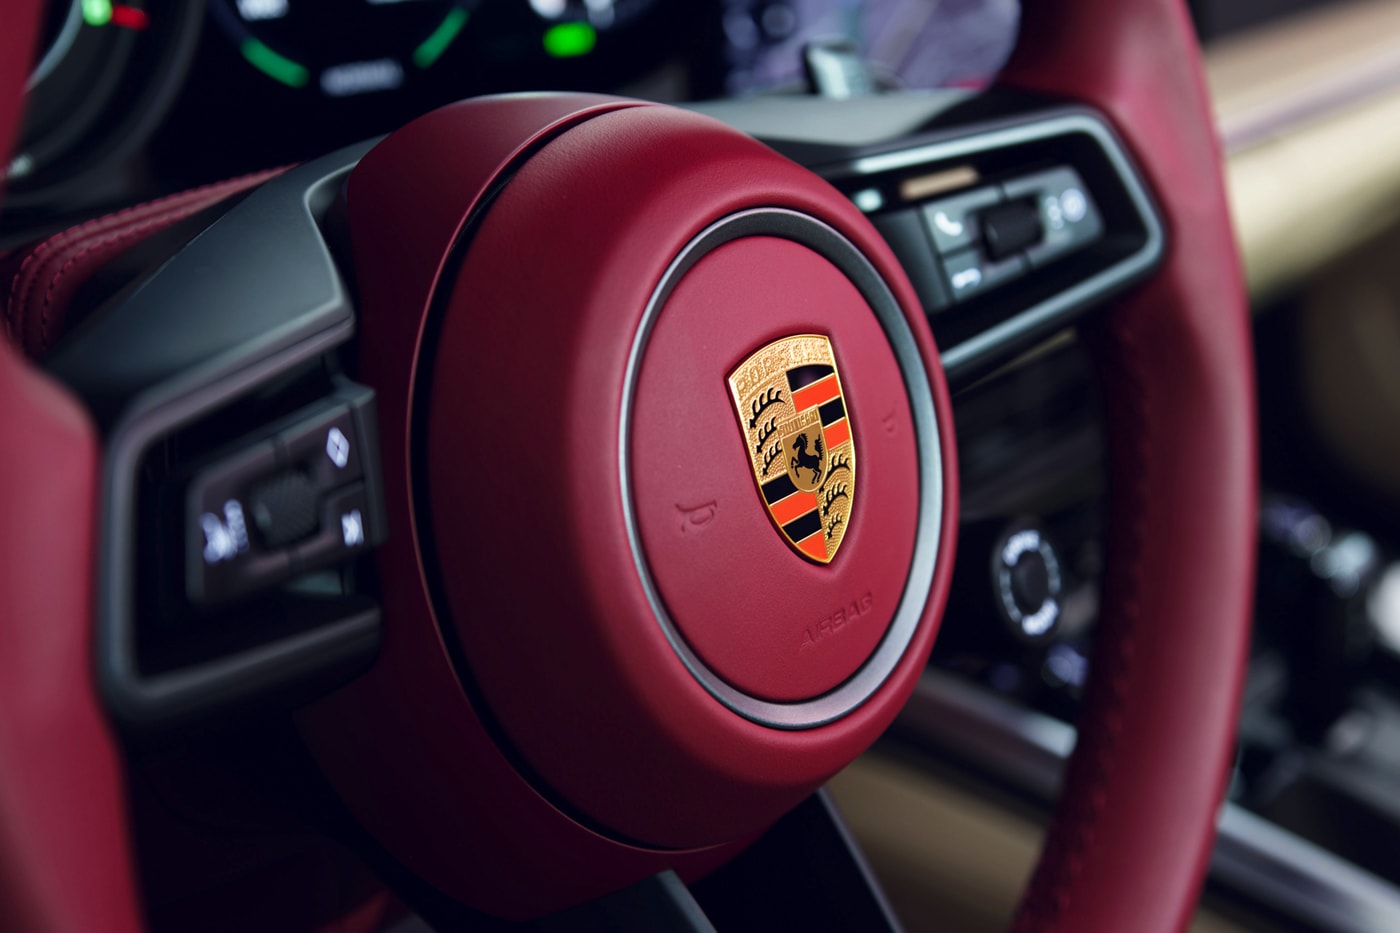 2021 Porsche 911 Targa 4S Heritage Design Edition Release Info Unveil Date Price Red